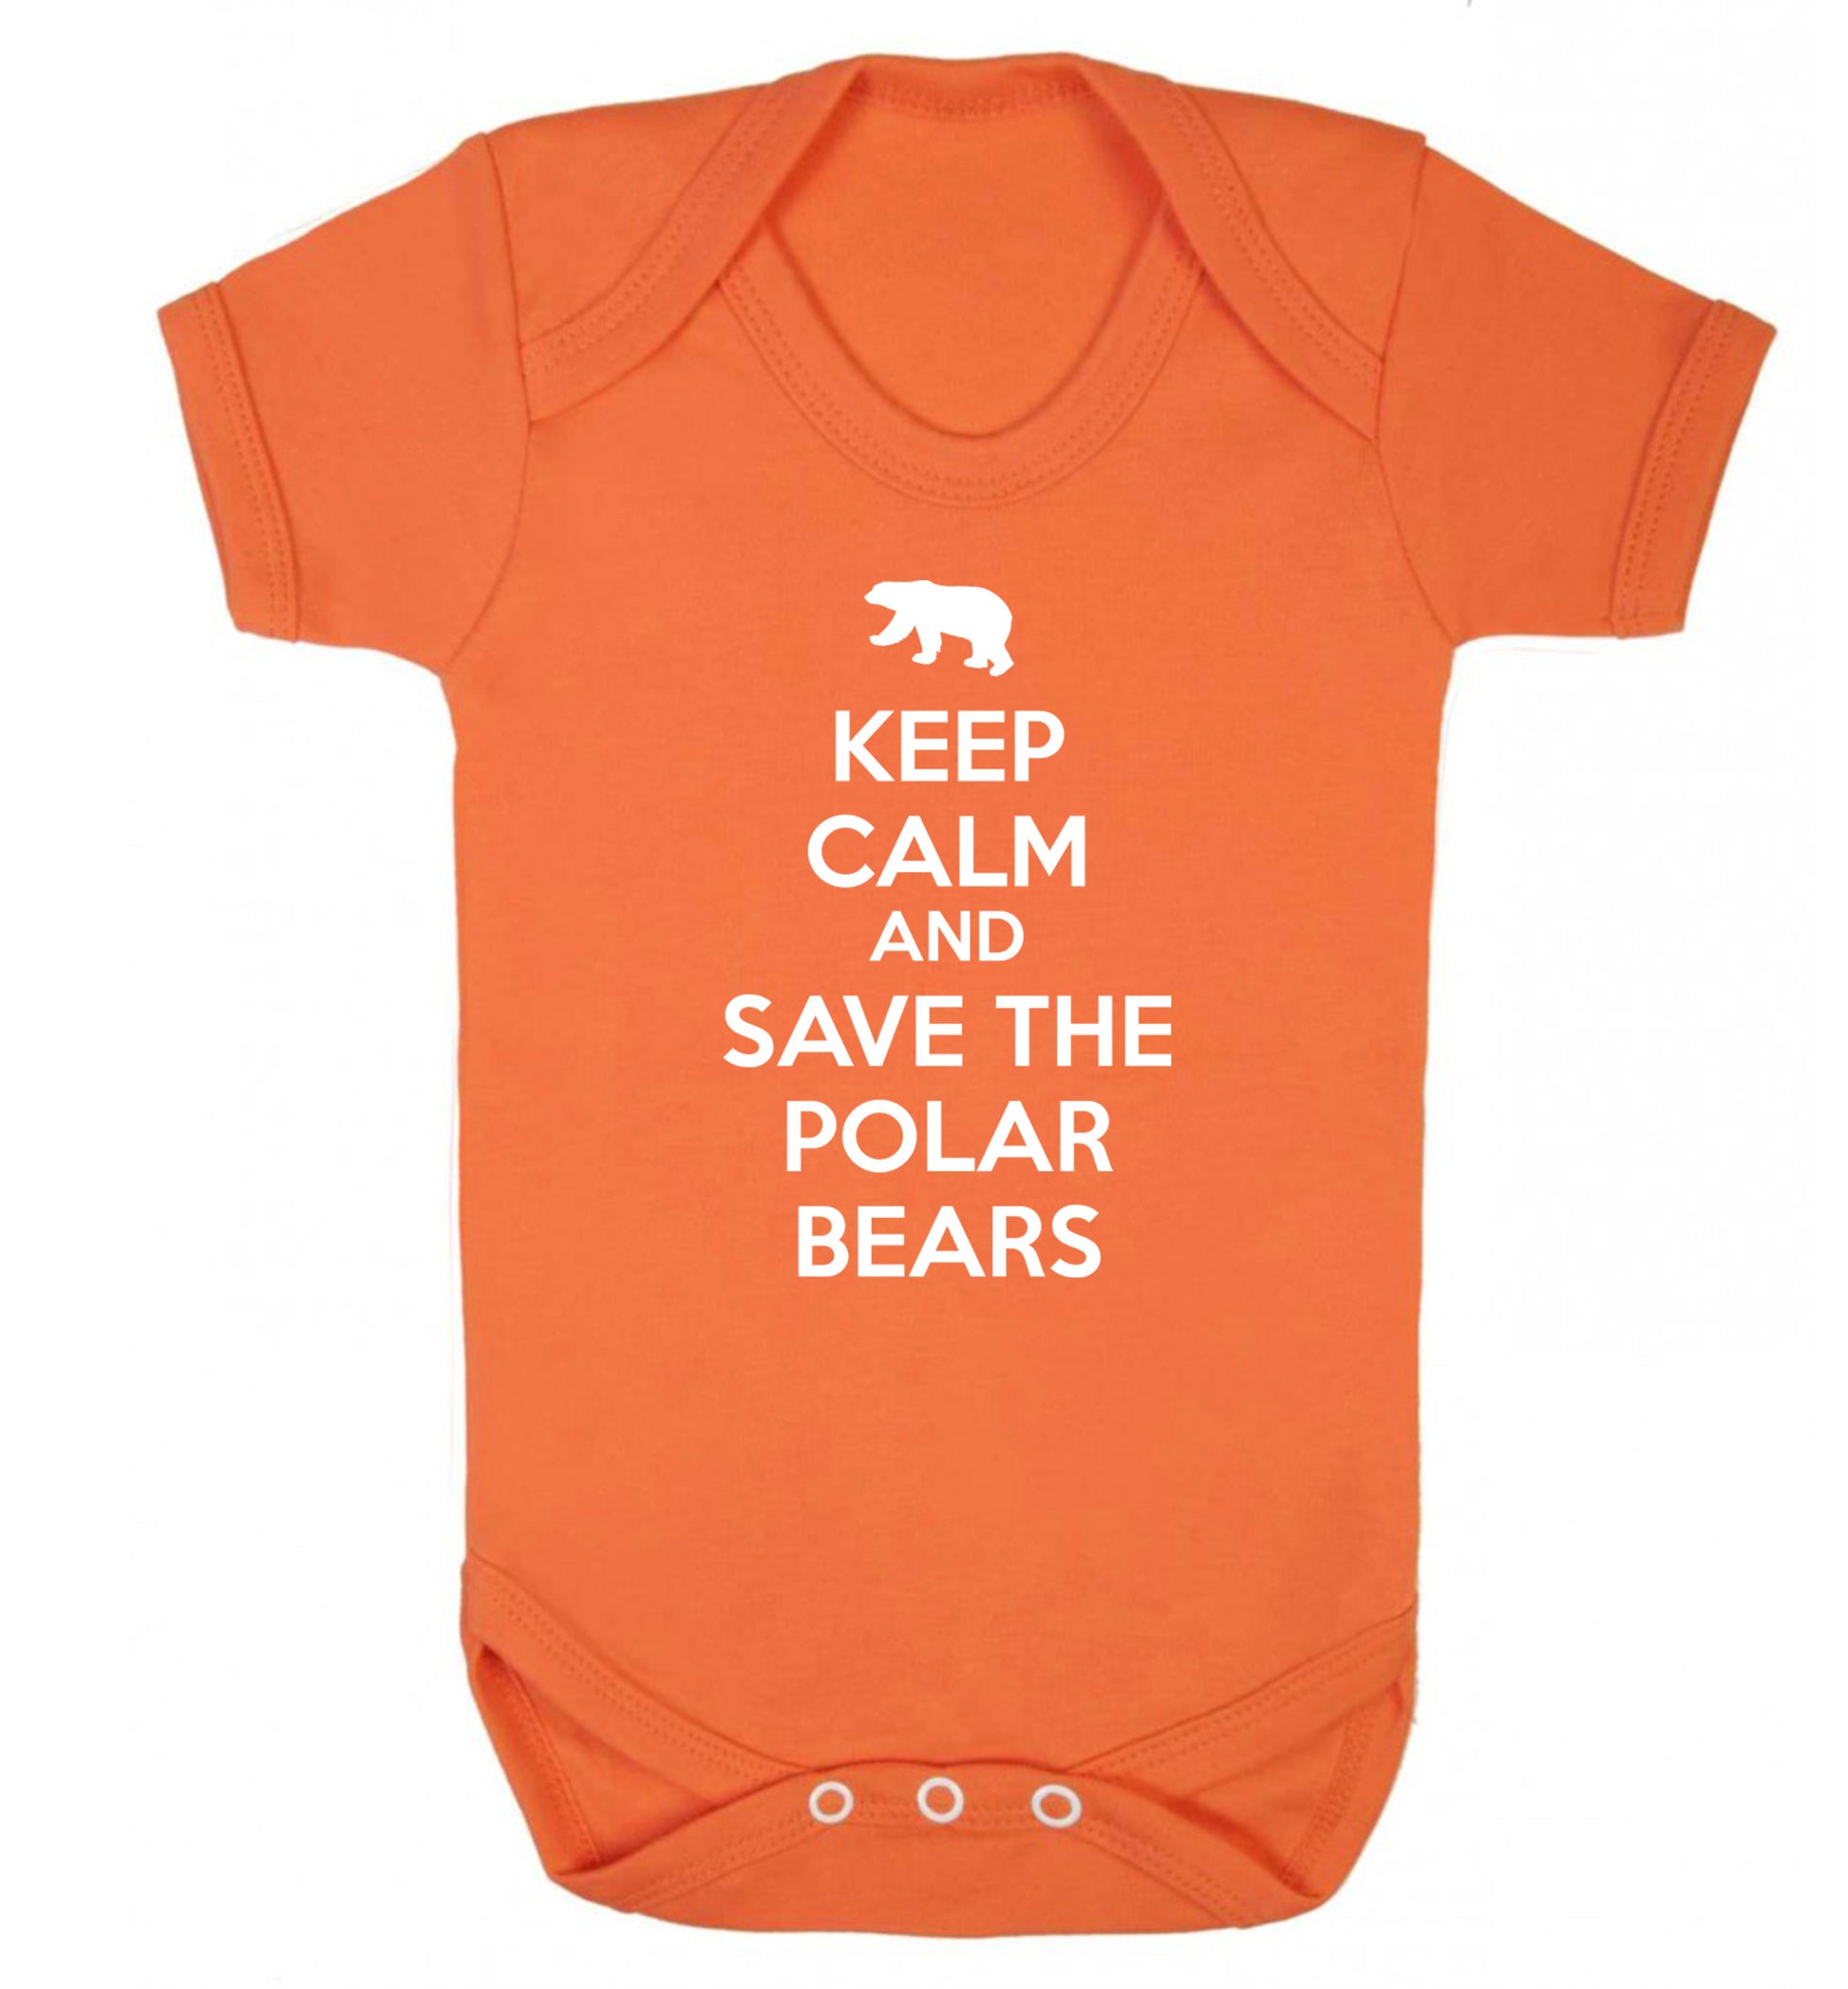 Keep calm and save the polar bears Baby Vest orange 18-24 months